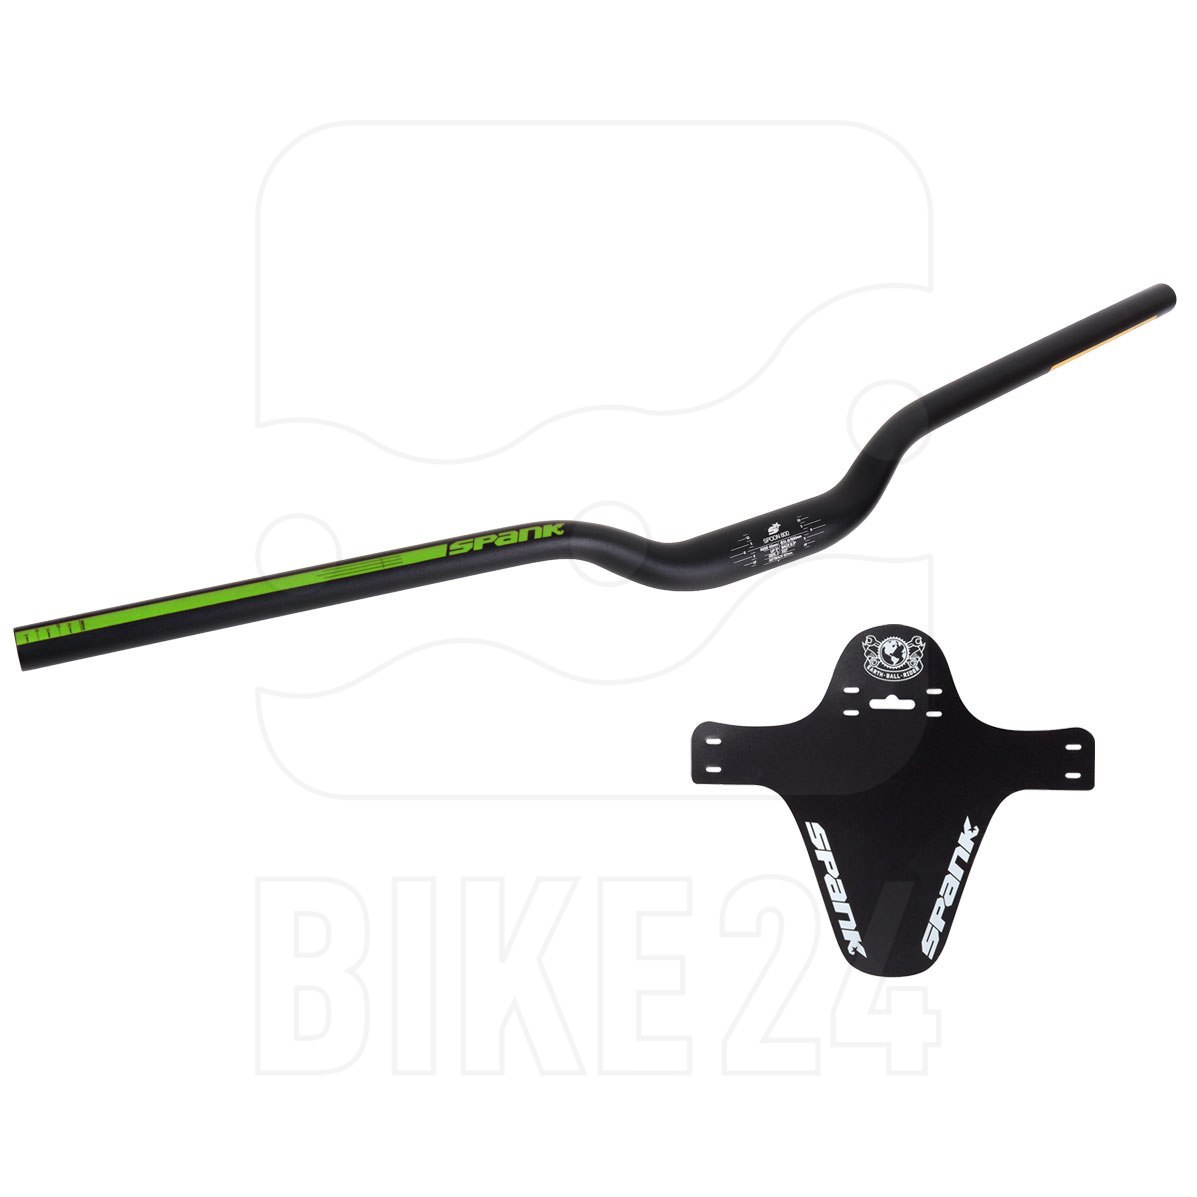 Picture of Spank Spoon 800 MTB Handlebar - shotpeen black/green